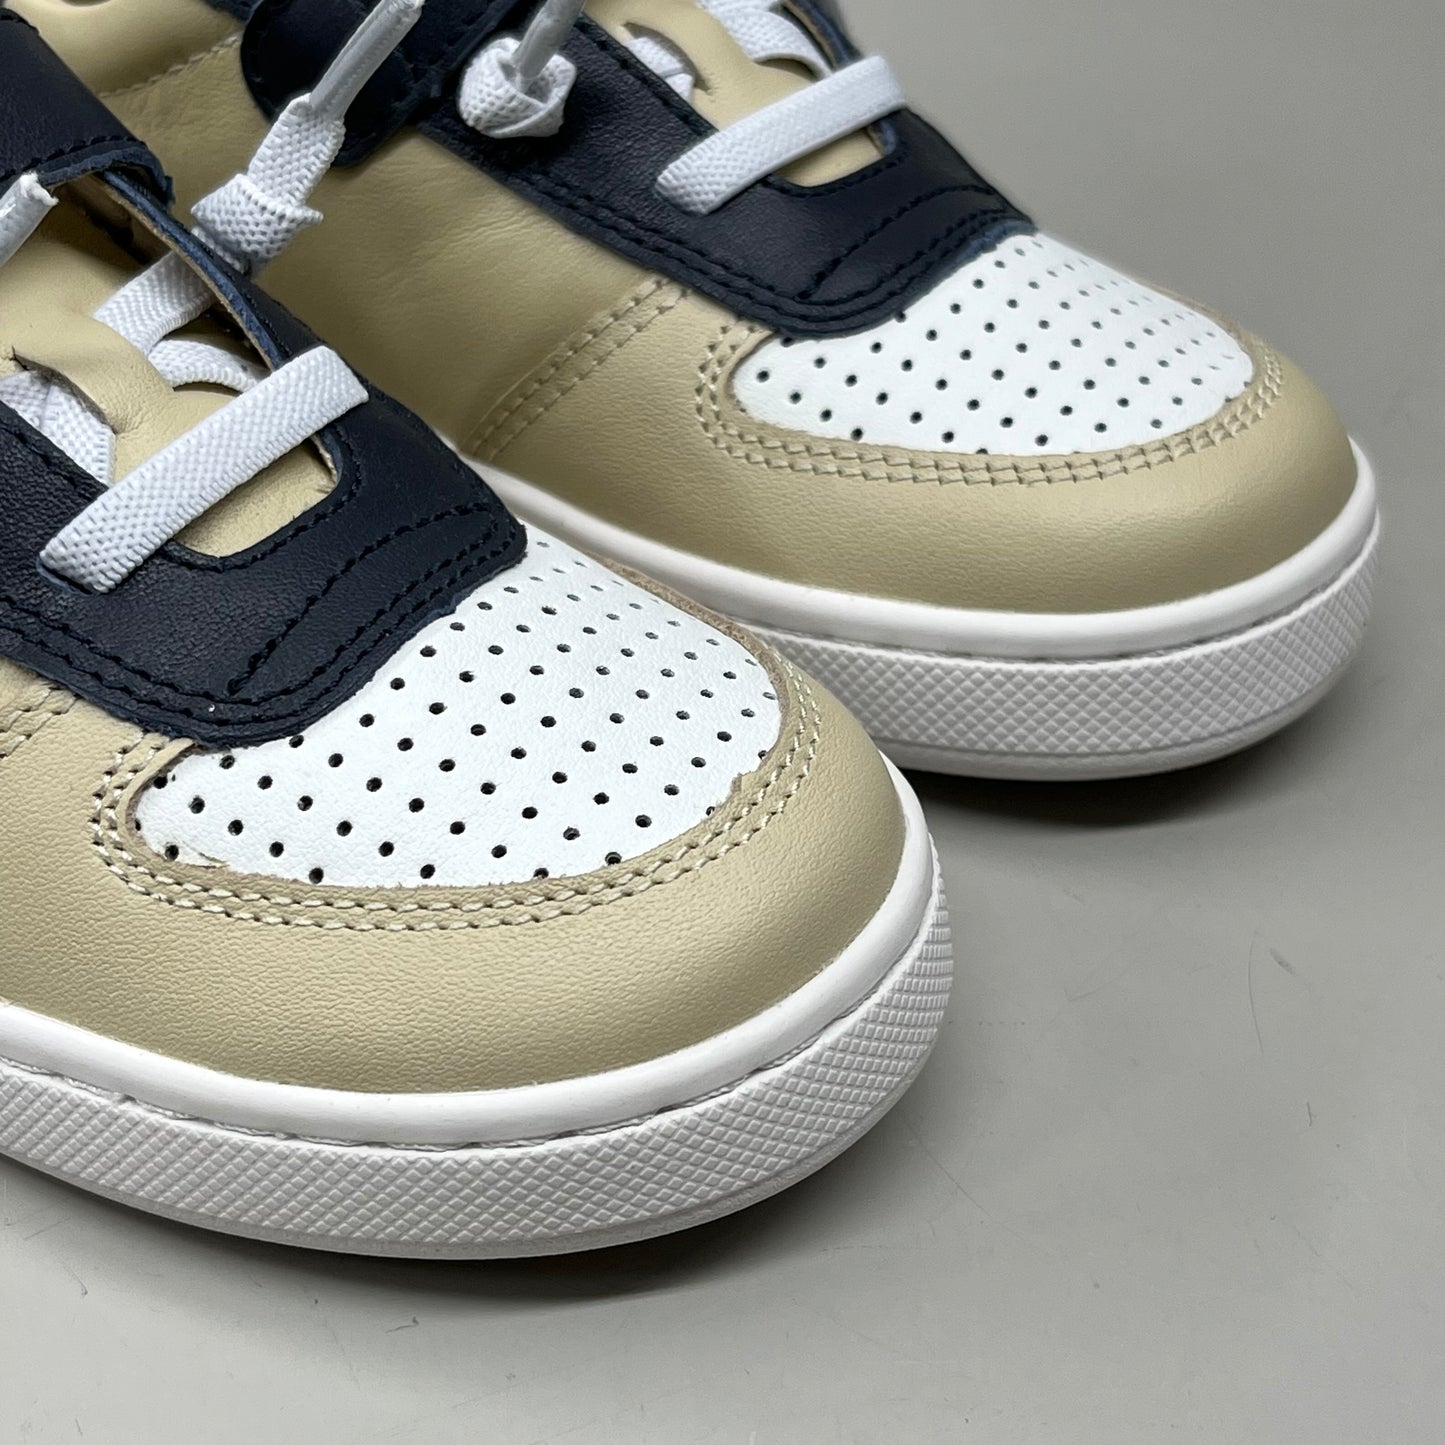 OLD SOLES Runsky Sneakers Leather Shoe Kid’s Sz 25 US 9 Cream/Navy/Snow #6135